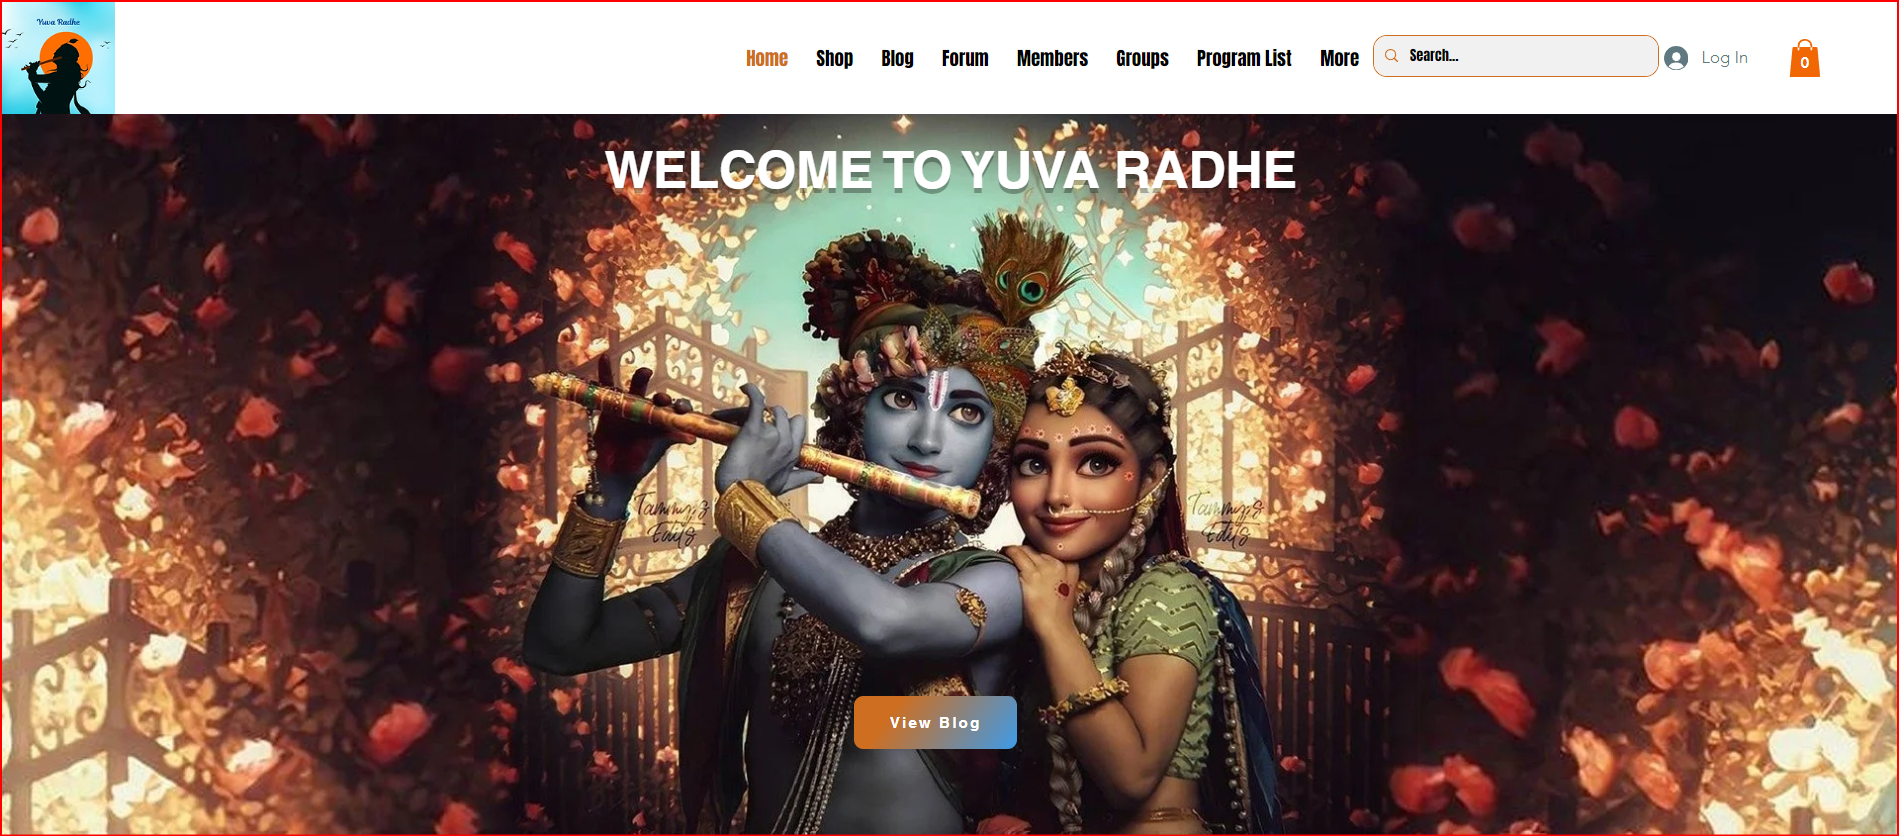 Yuva radhe, Spirtuality blog, wix website